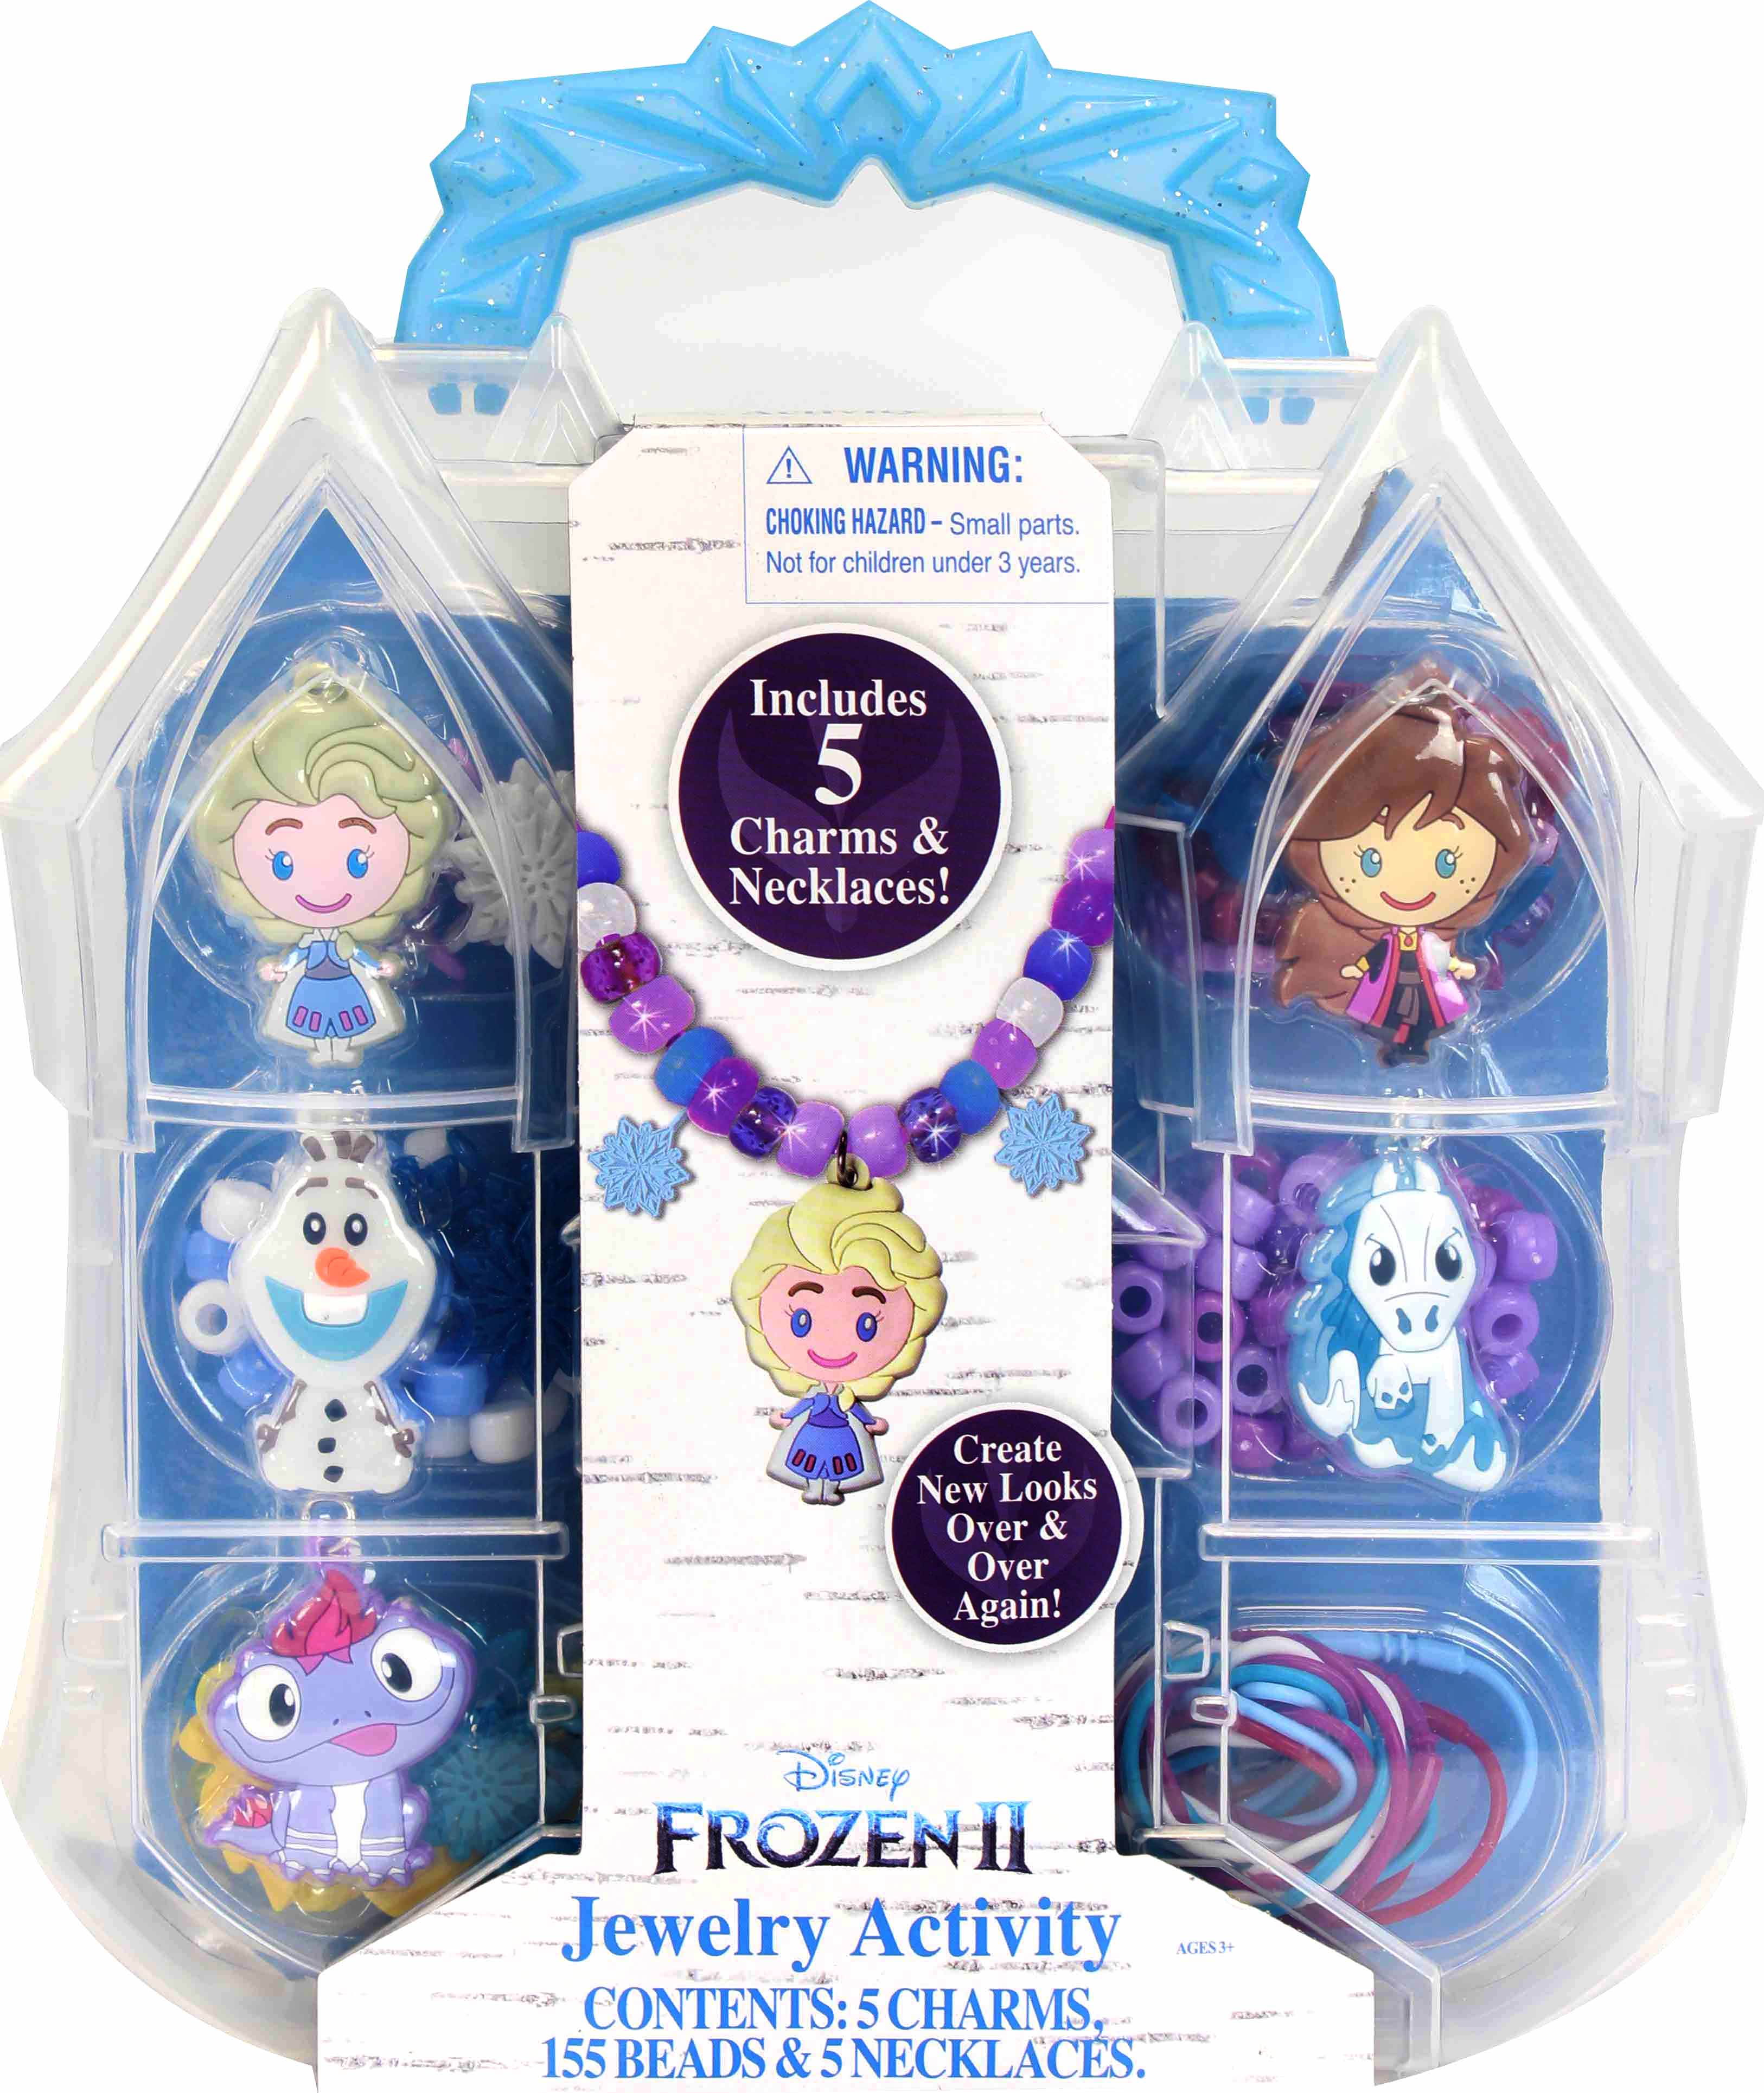 Disney Frozen 2 Plastic Jewelry Activity Set - multi character, multicolored - image 1 of 5